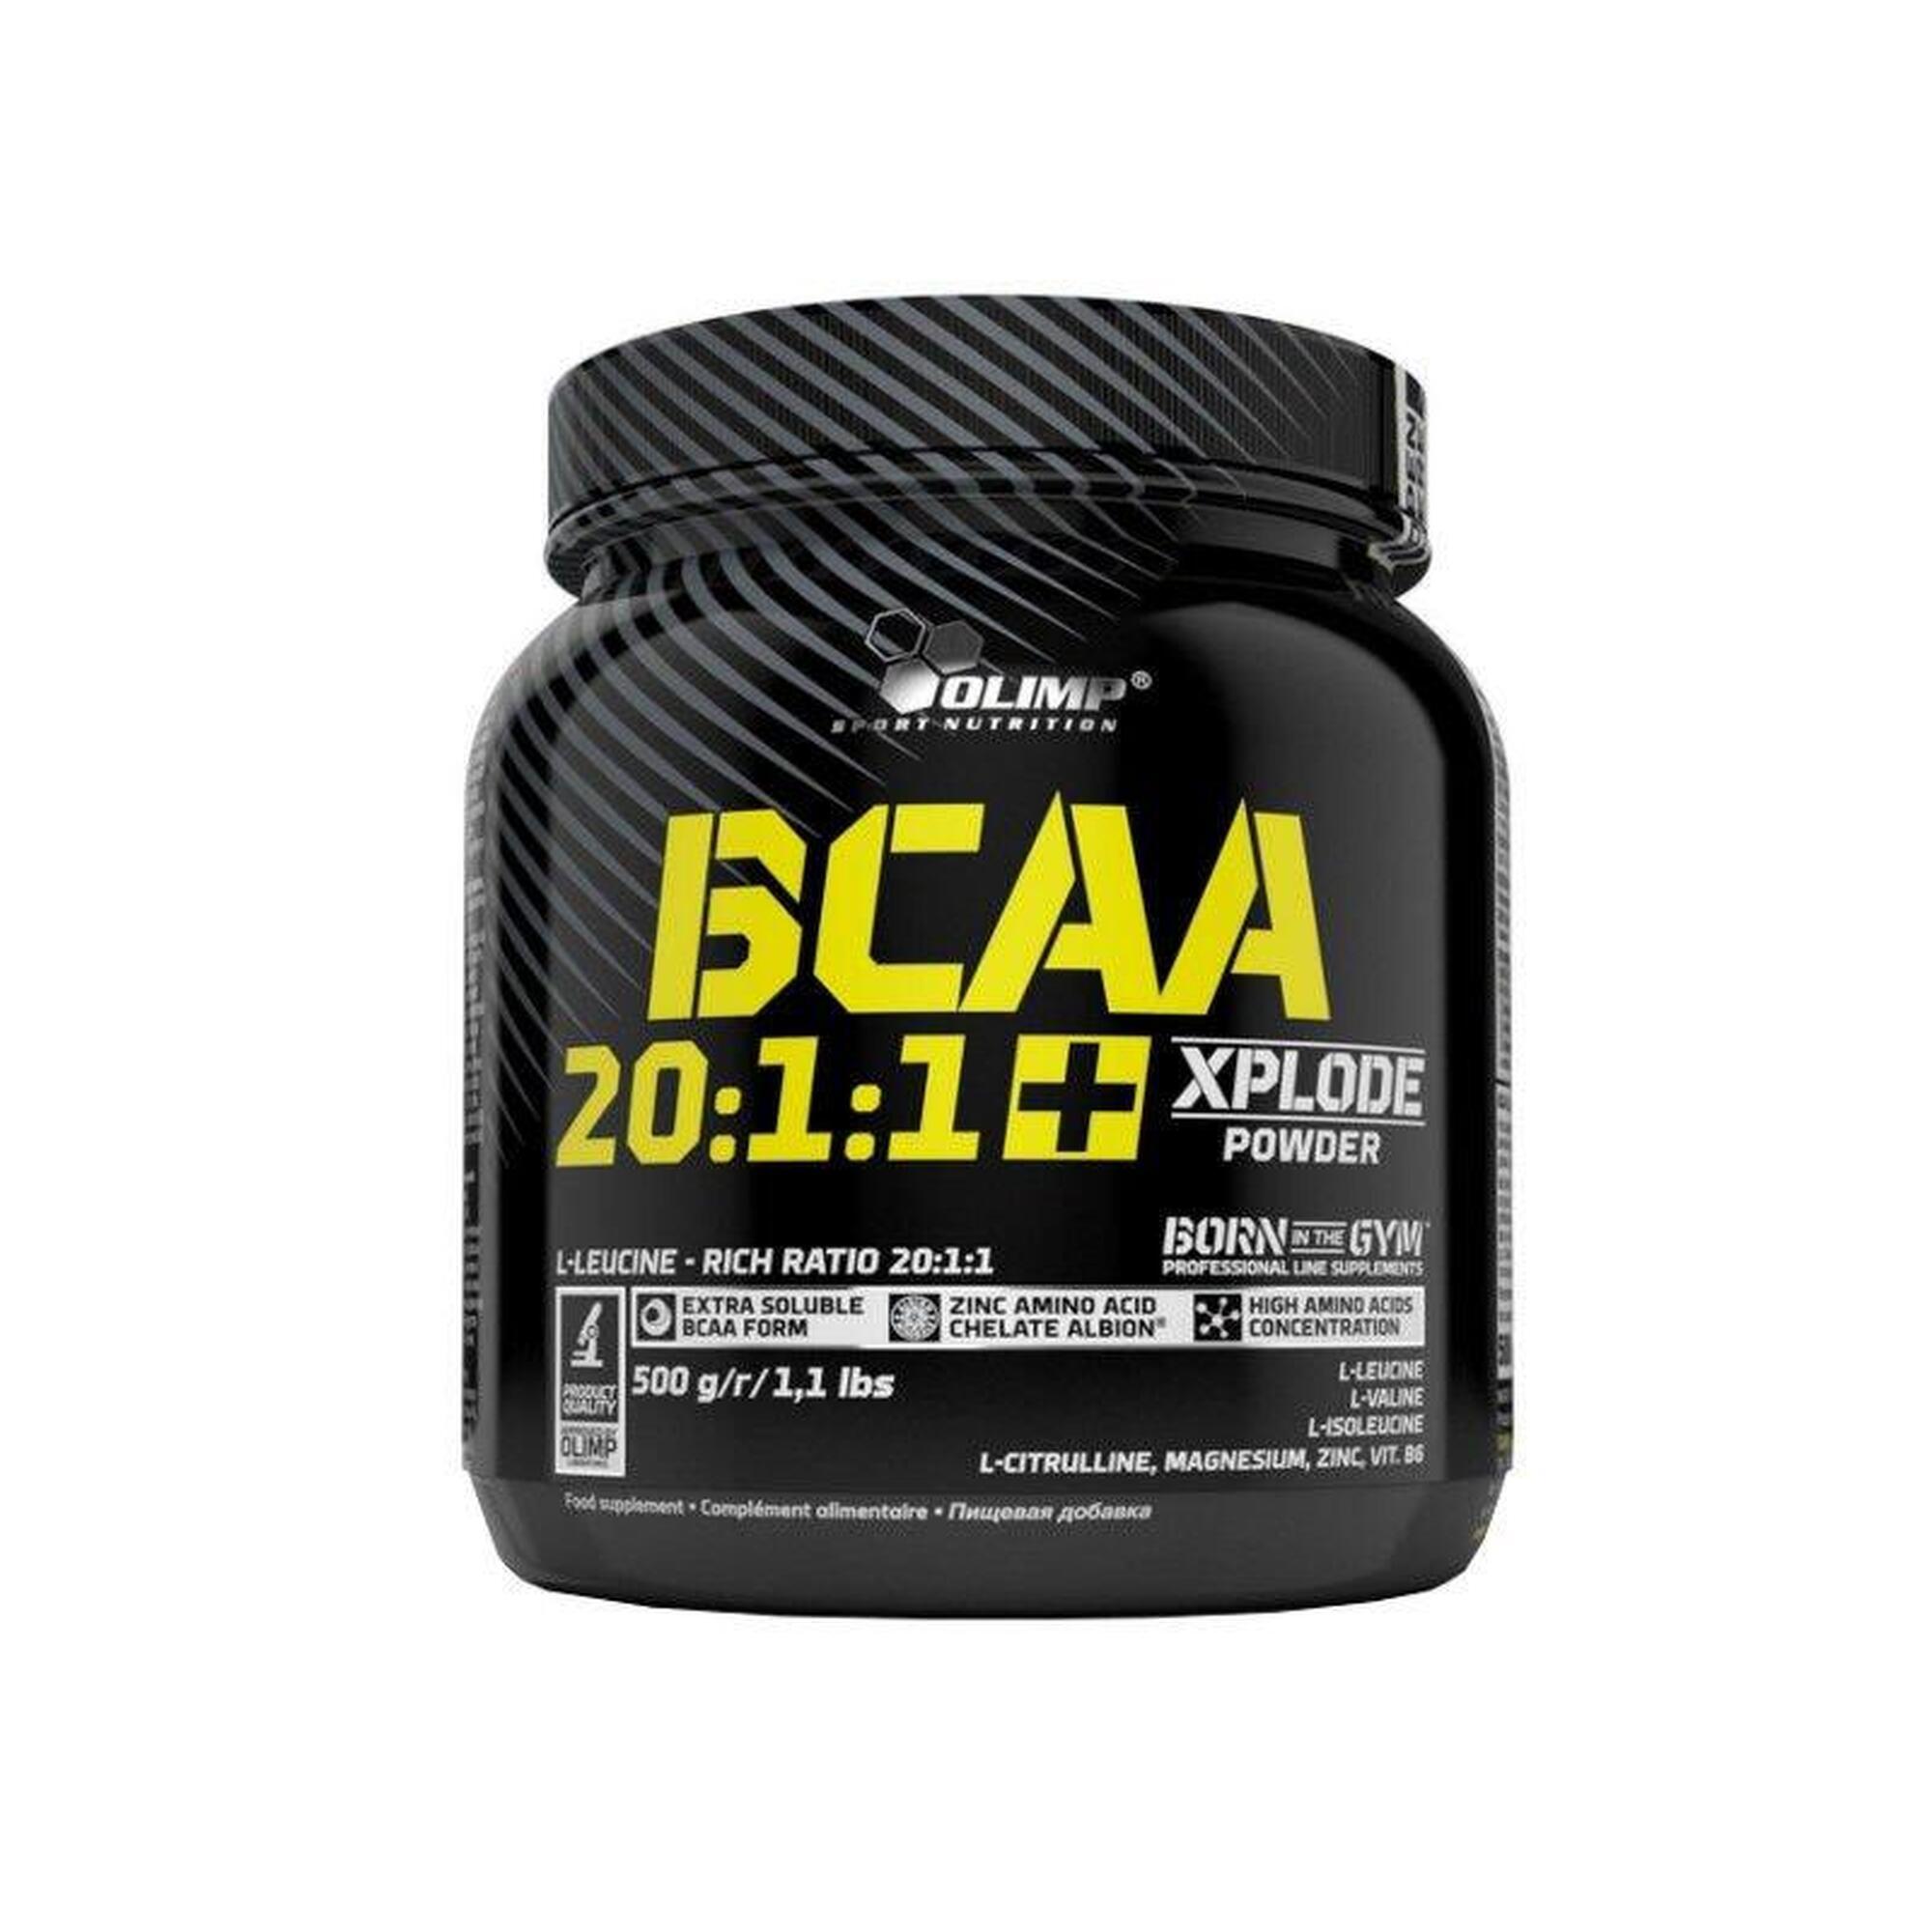 BCAA 20:1:1 Xplode Powder OLIMP 500 g Cola